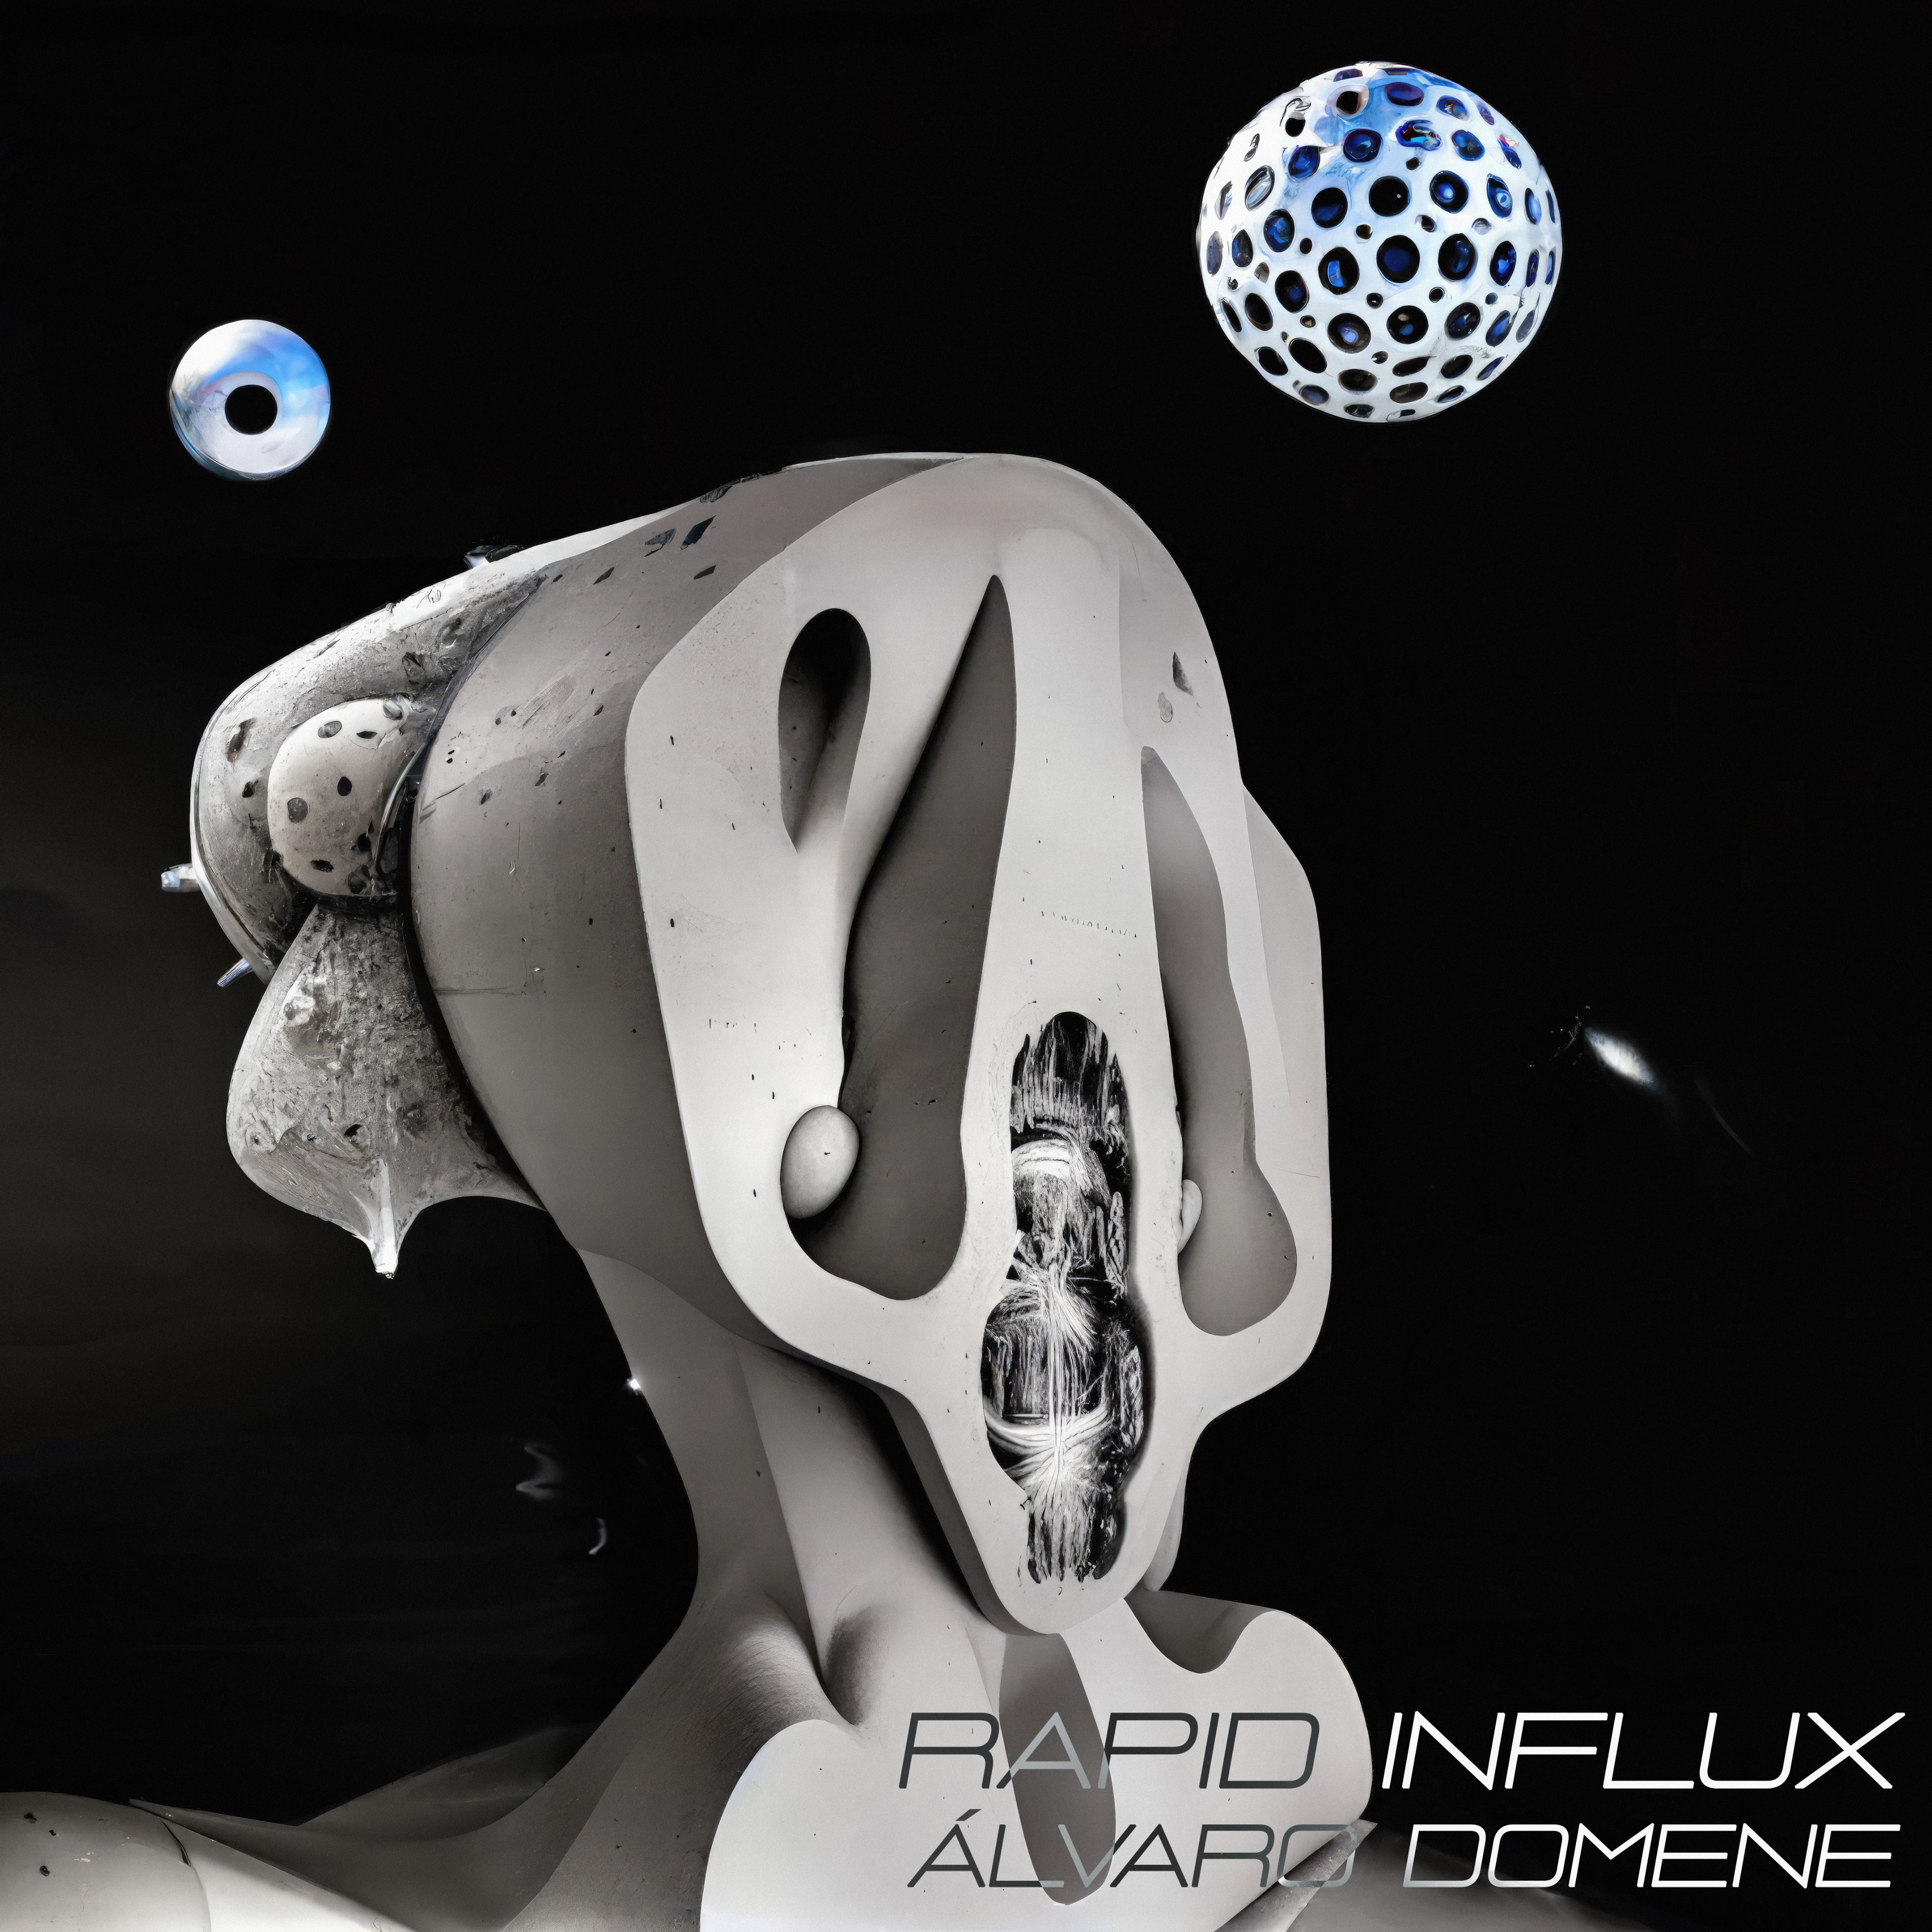  RAPID INFLUX by Álvaro Domene